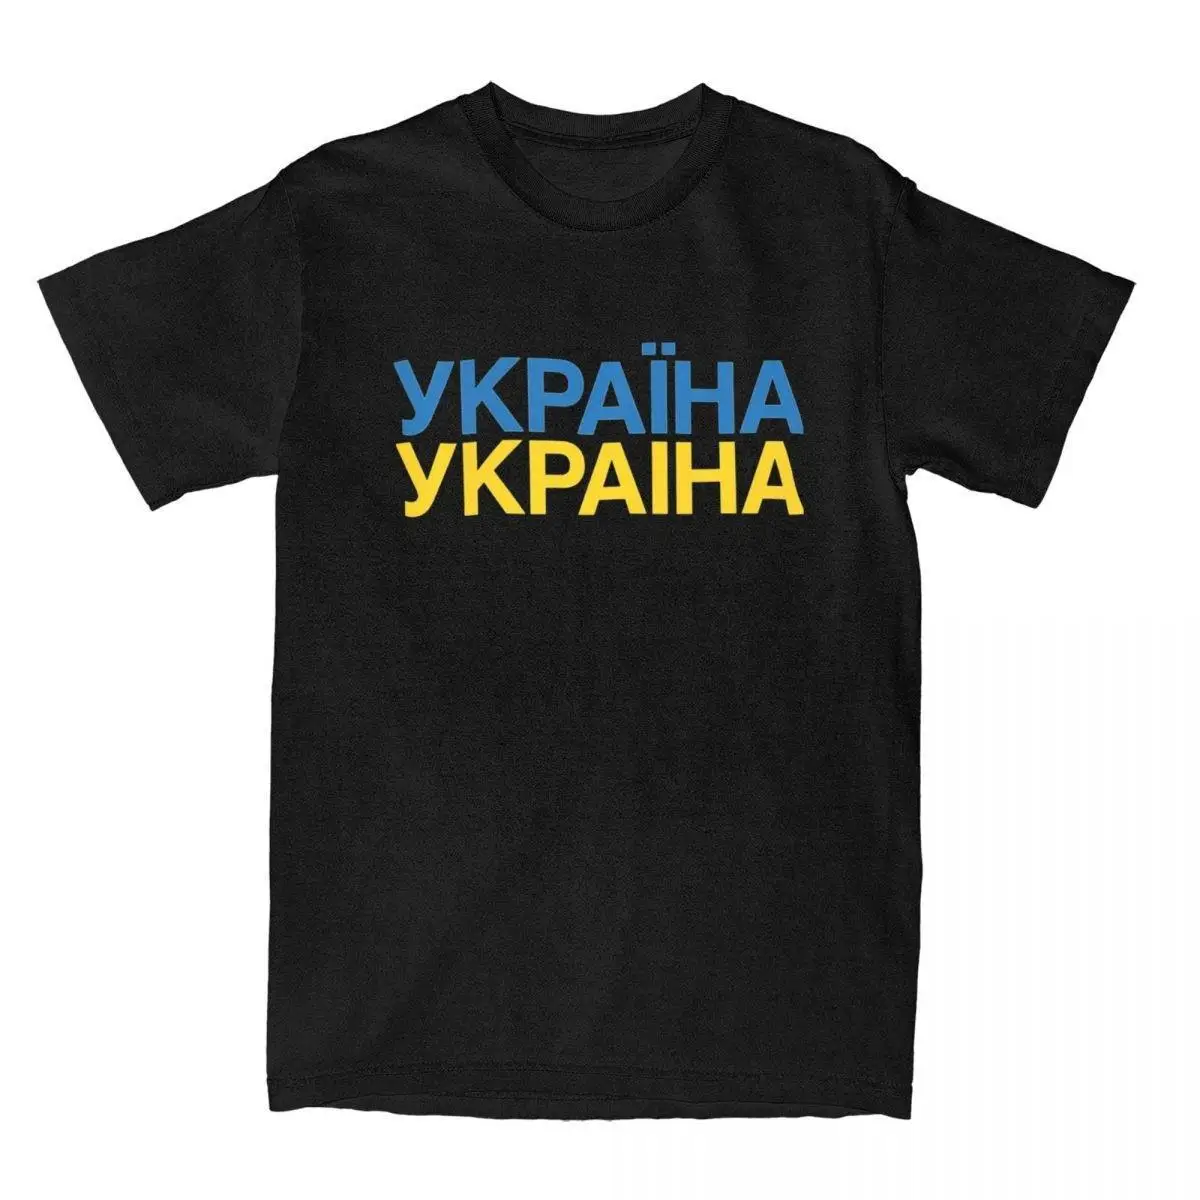 Vintage UKRAINA Flag T-Shirts for Men Crewneck Cotton T Shirts Short Sleeve Tees Printed Clothes